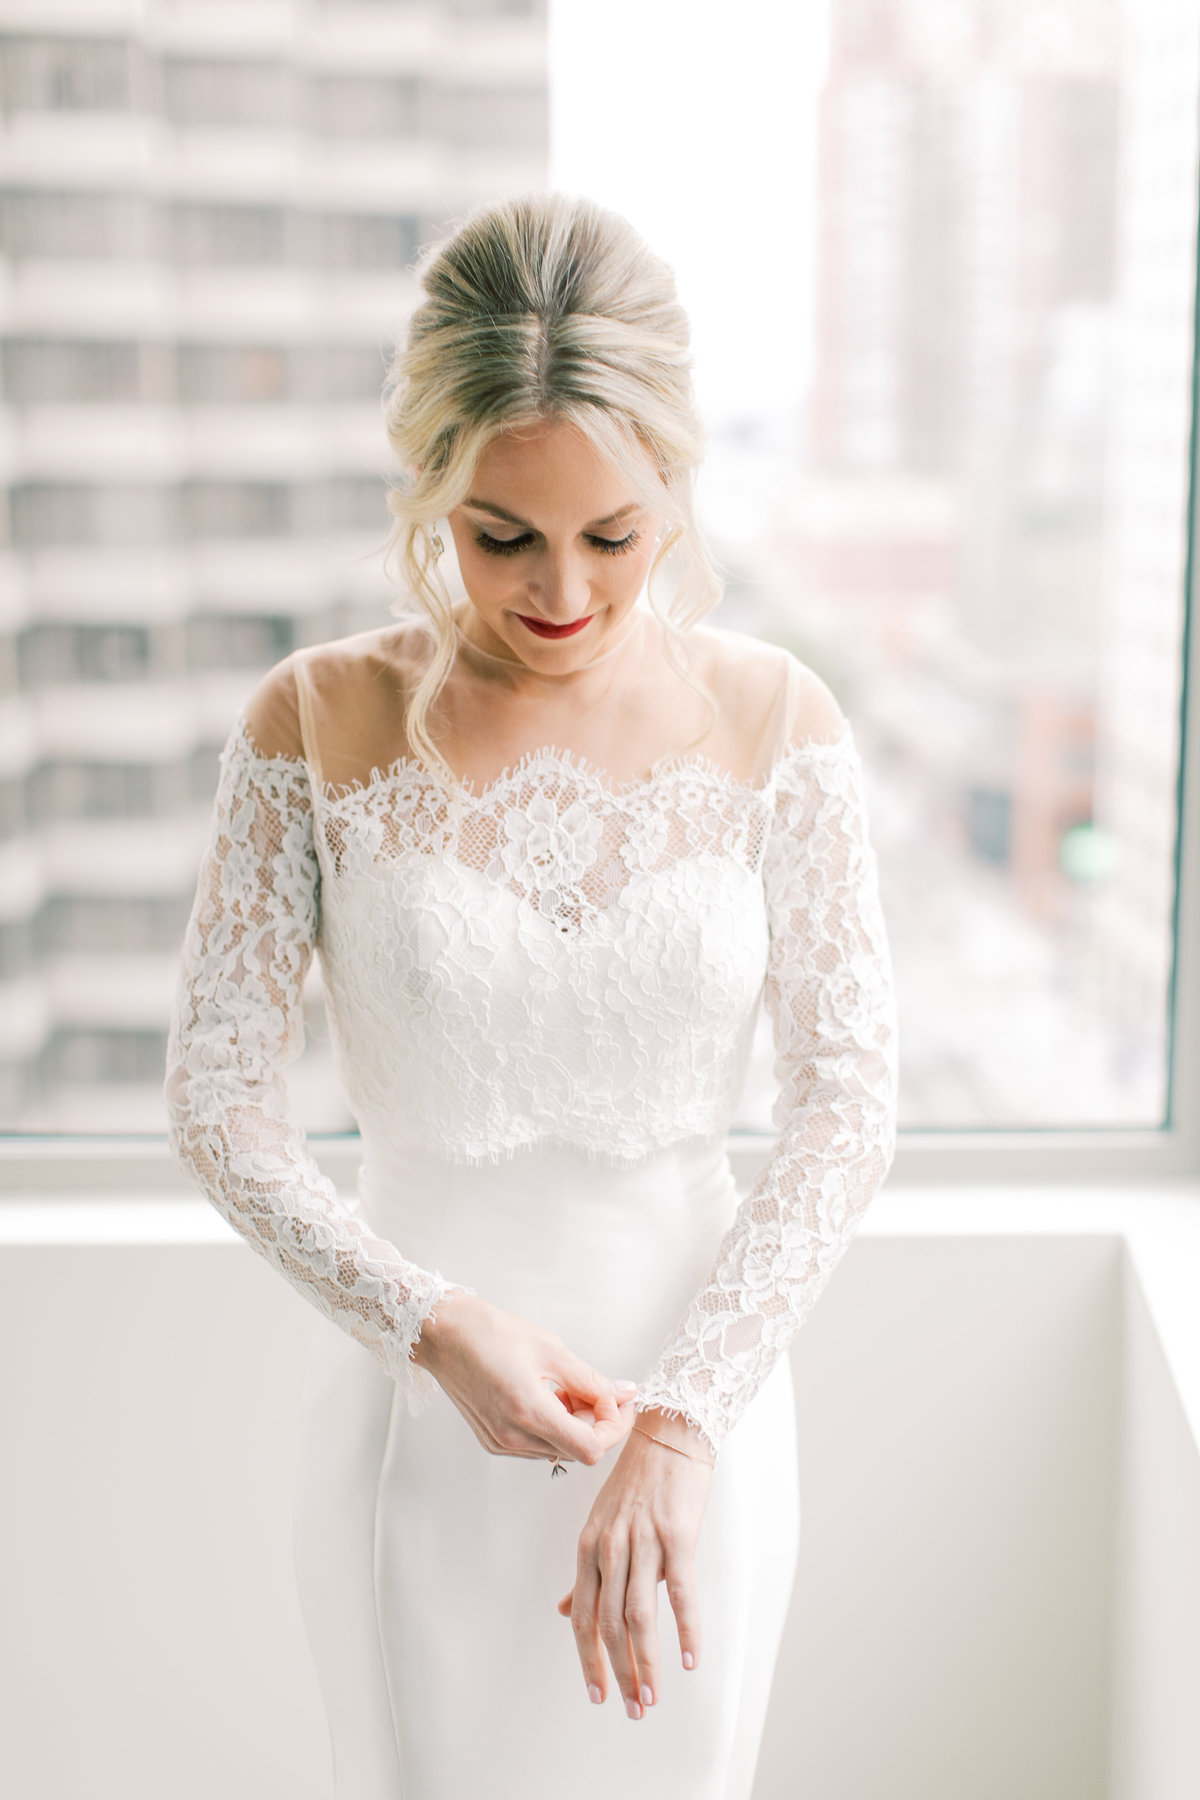 bride adjusting sleeves on lace wedding gown